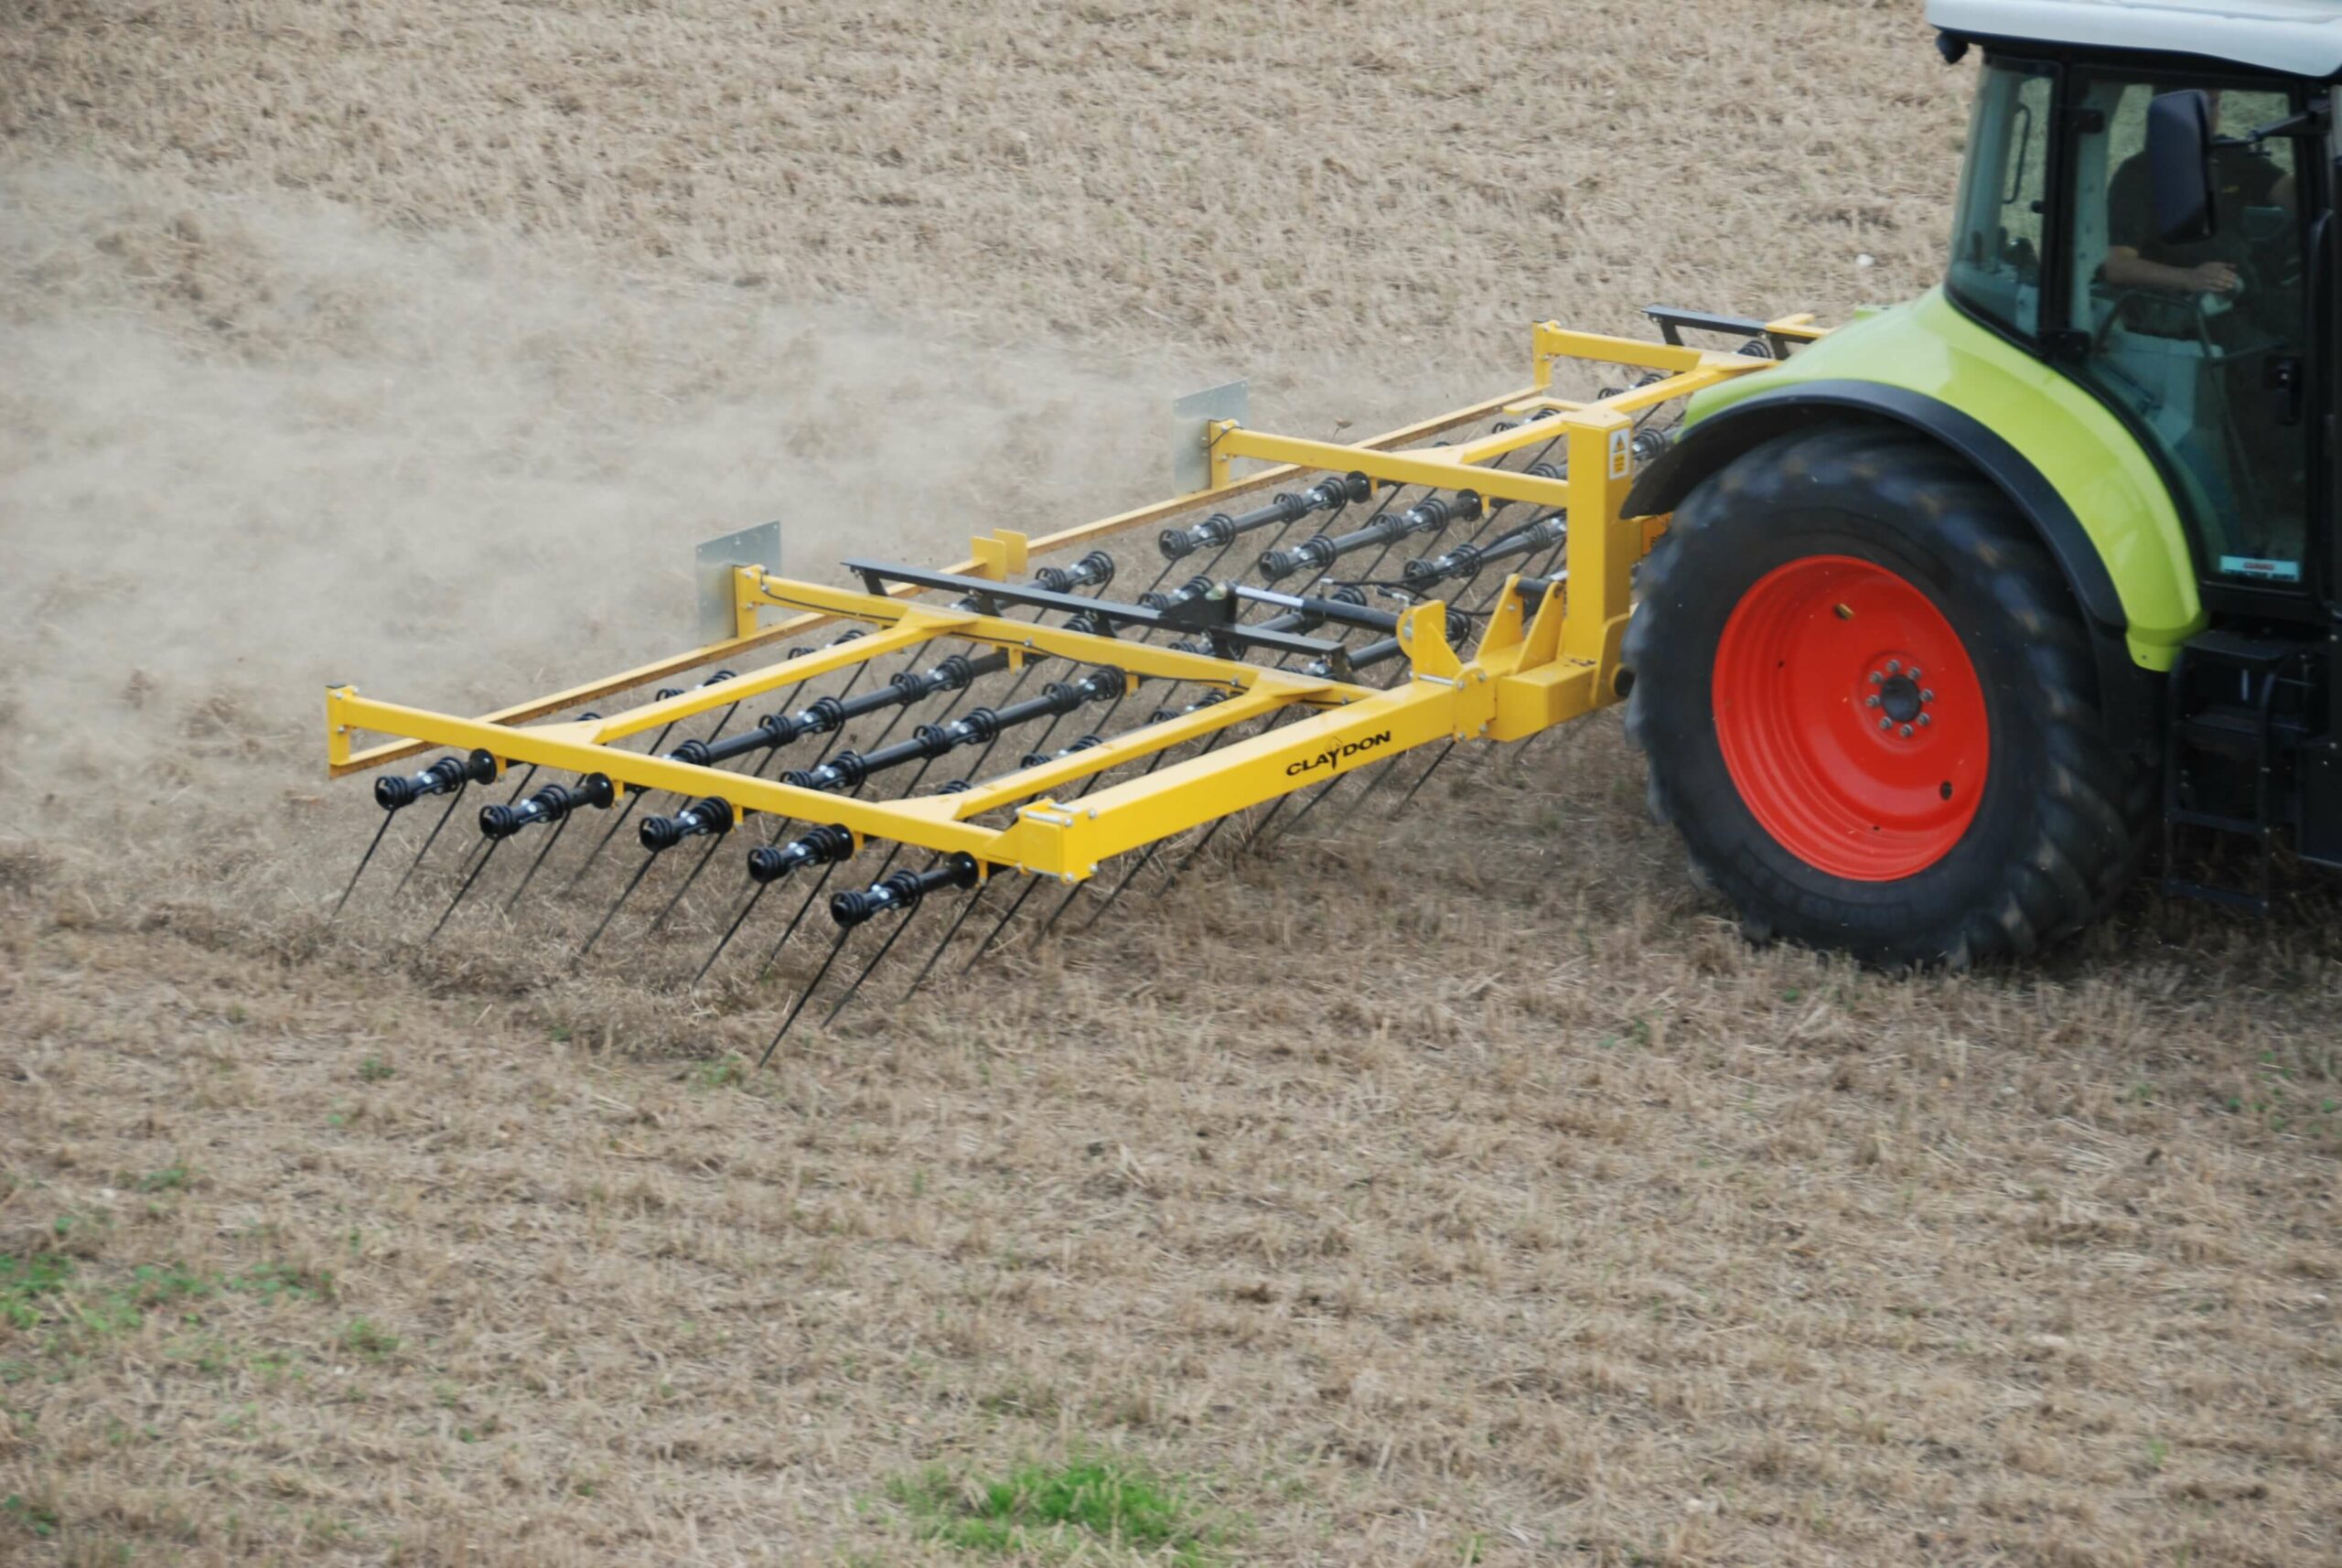 straw harrow machine is in operation on the farm